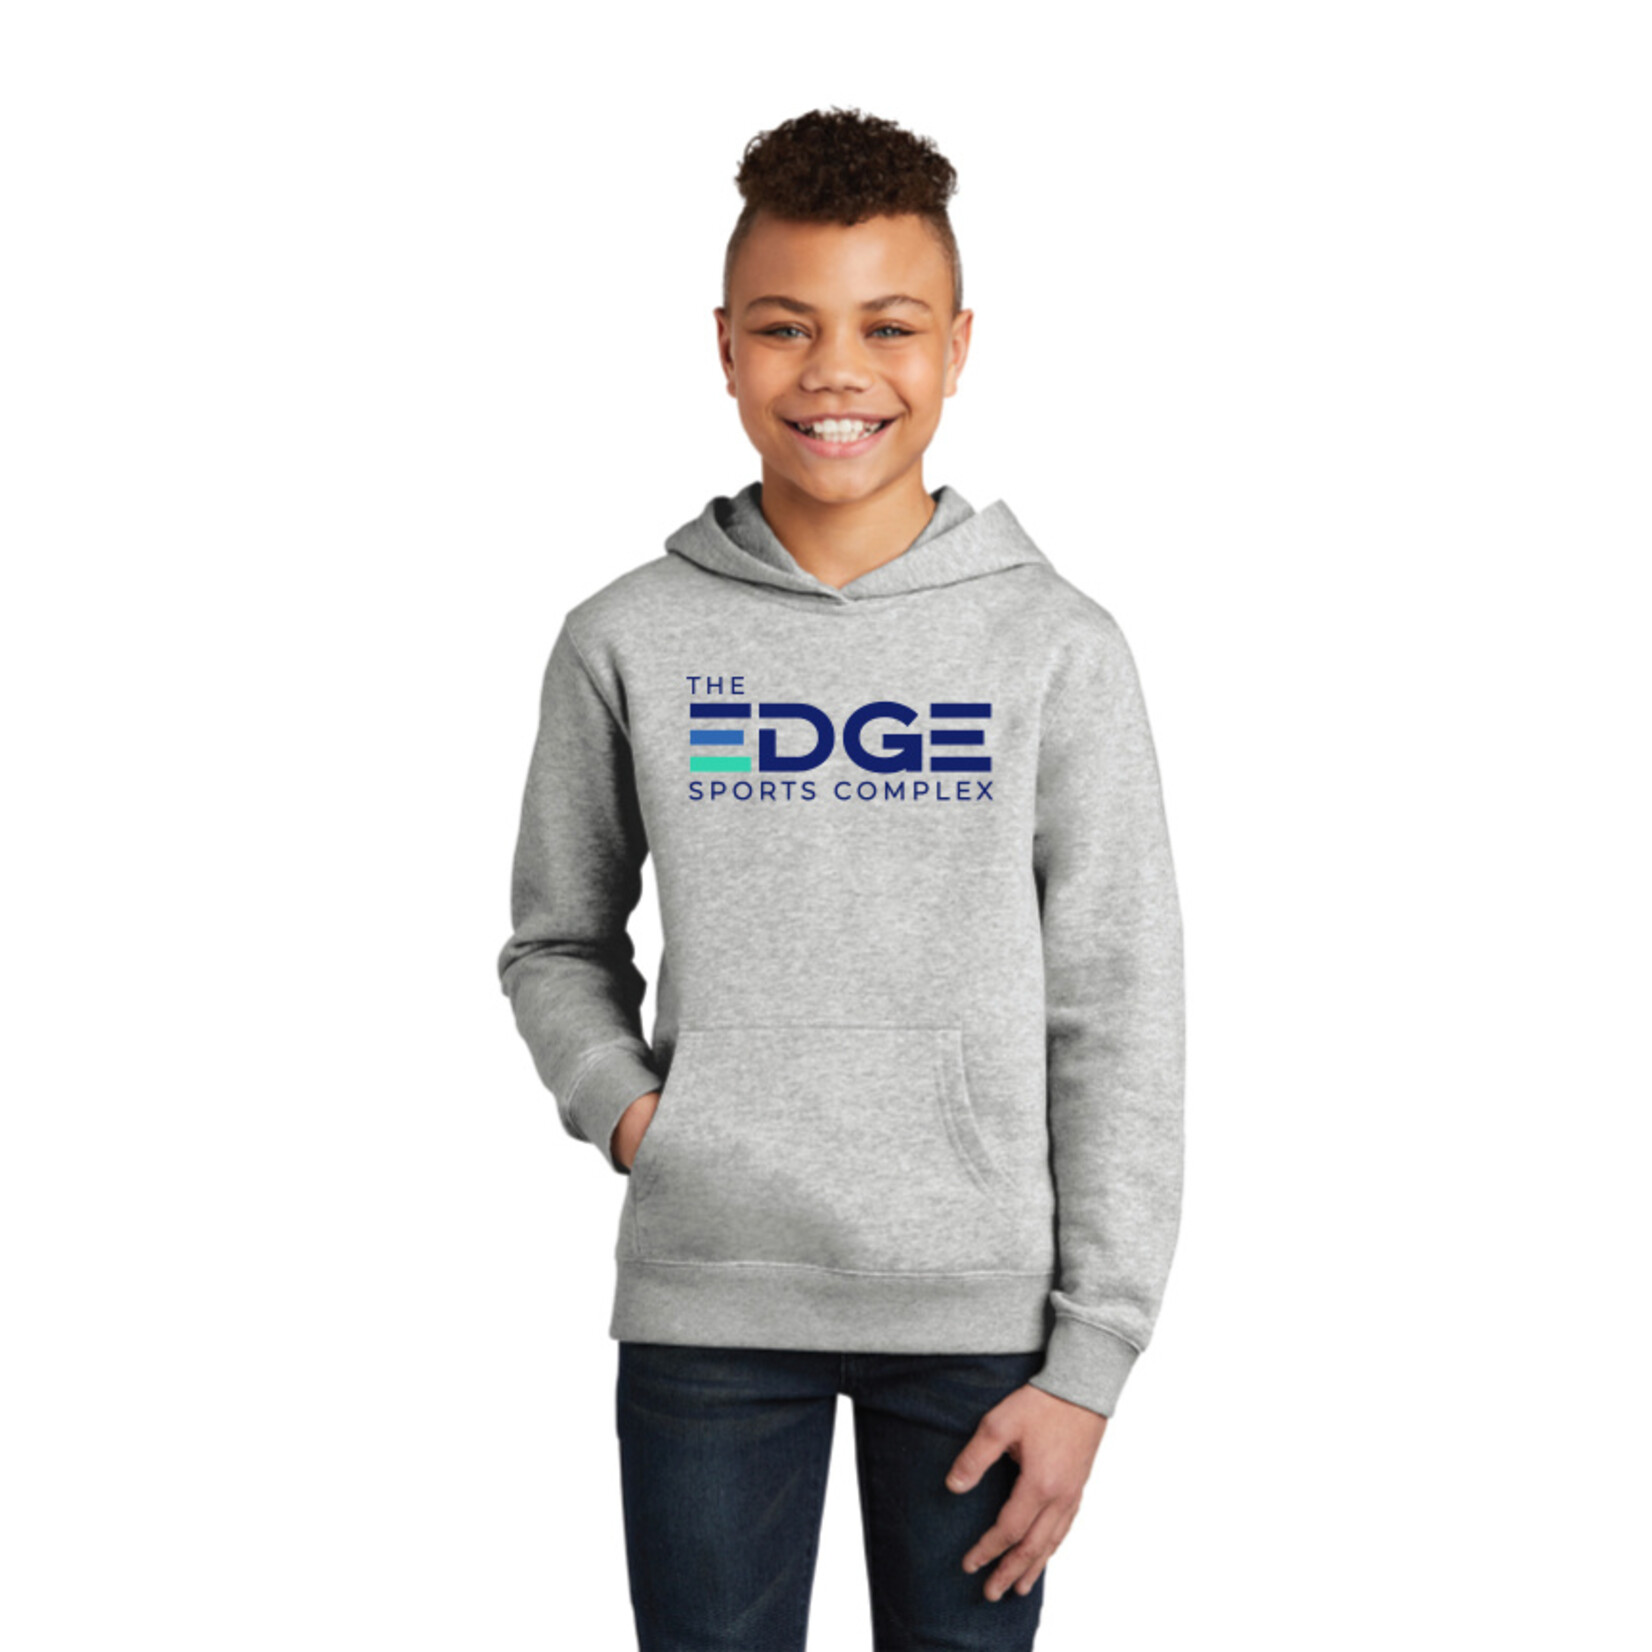 THE EDGE Youth Hooded Sweatshirt